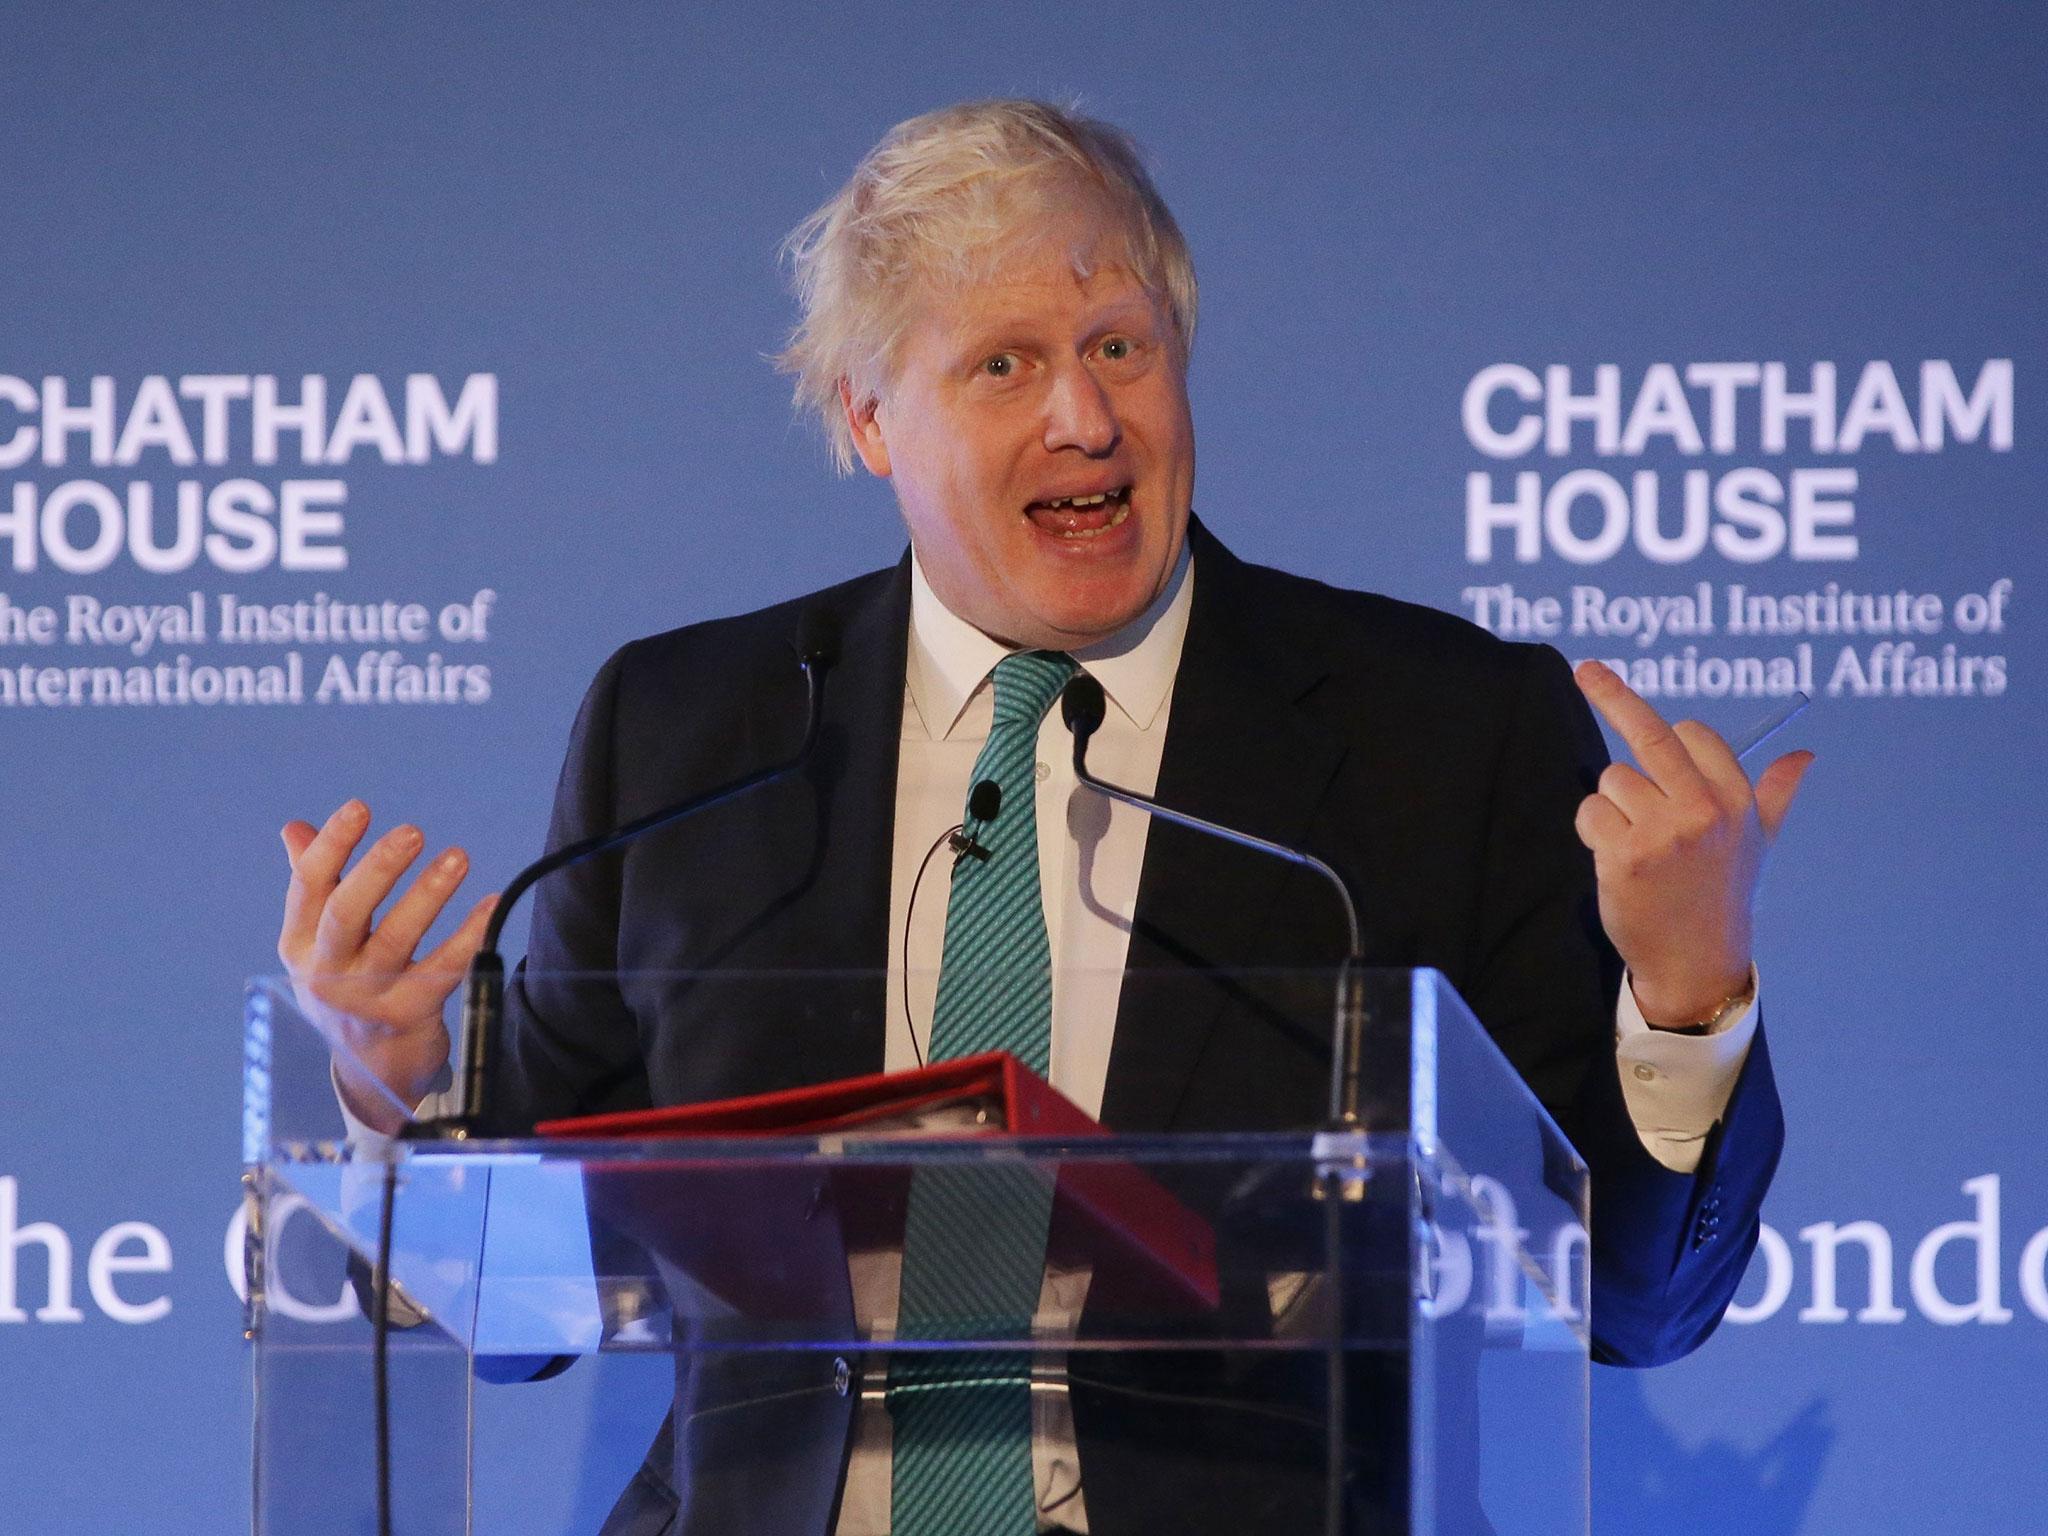 British Foreign Secretary Boris Johnson gives a speech at Chatham House